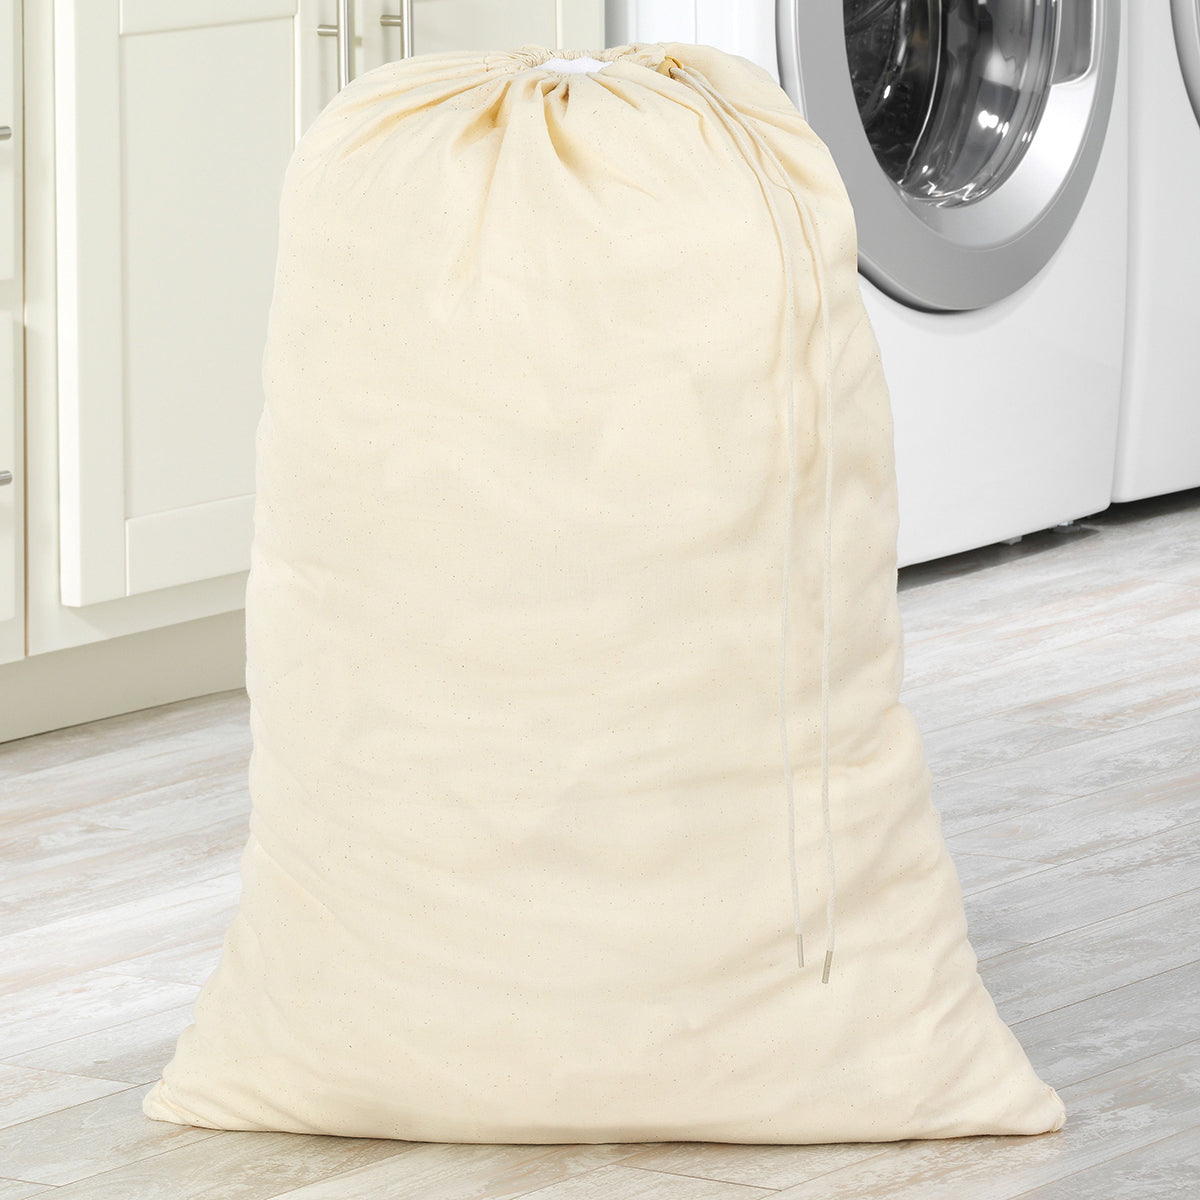 Fashion Forms #887 Laundry Bag 